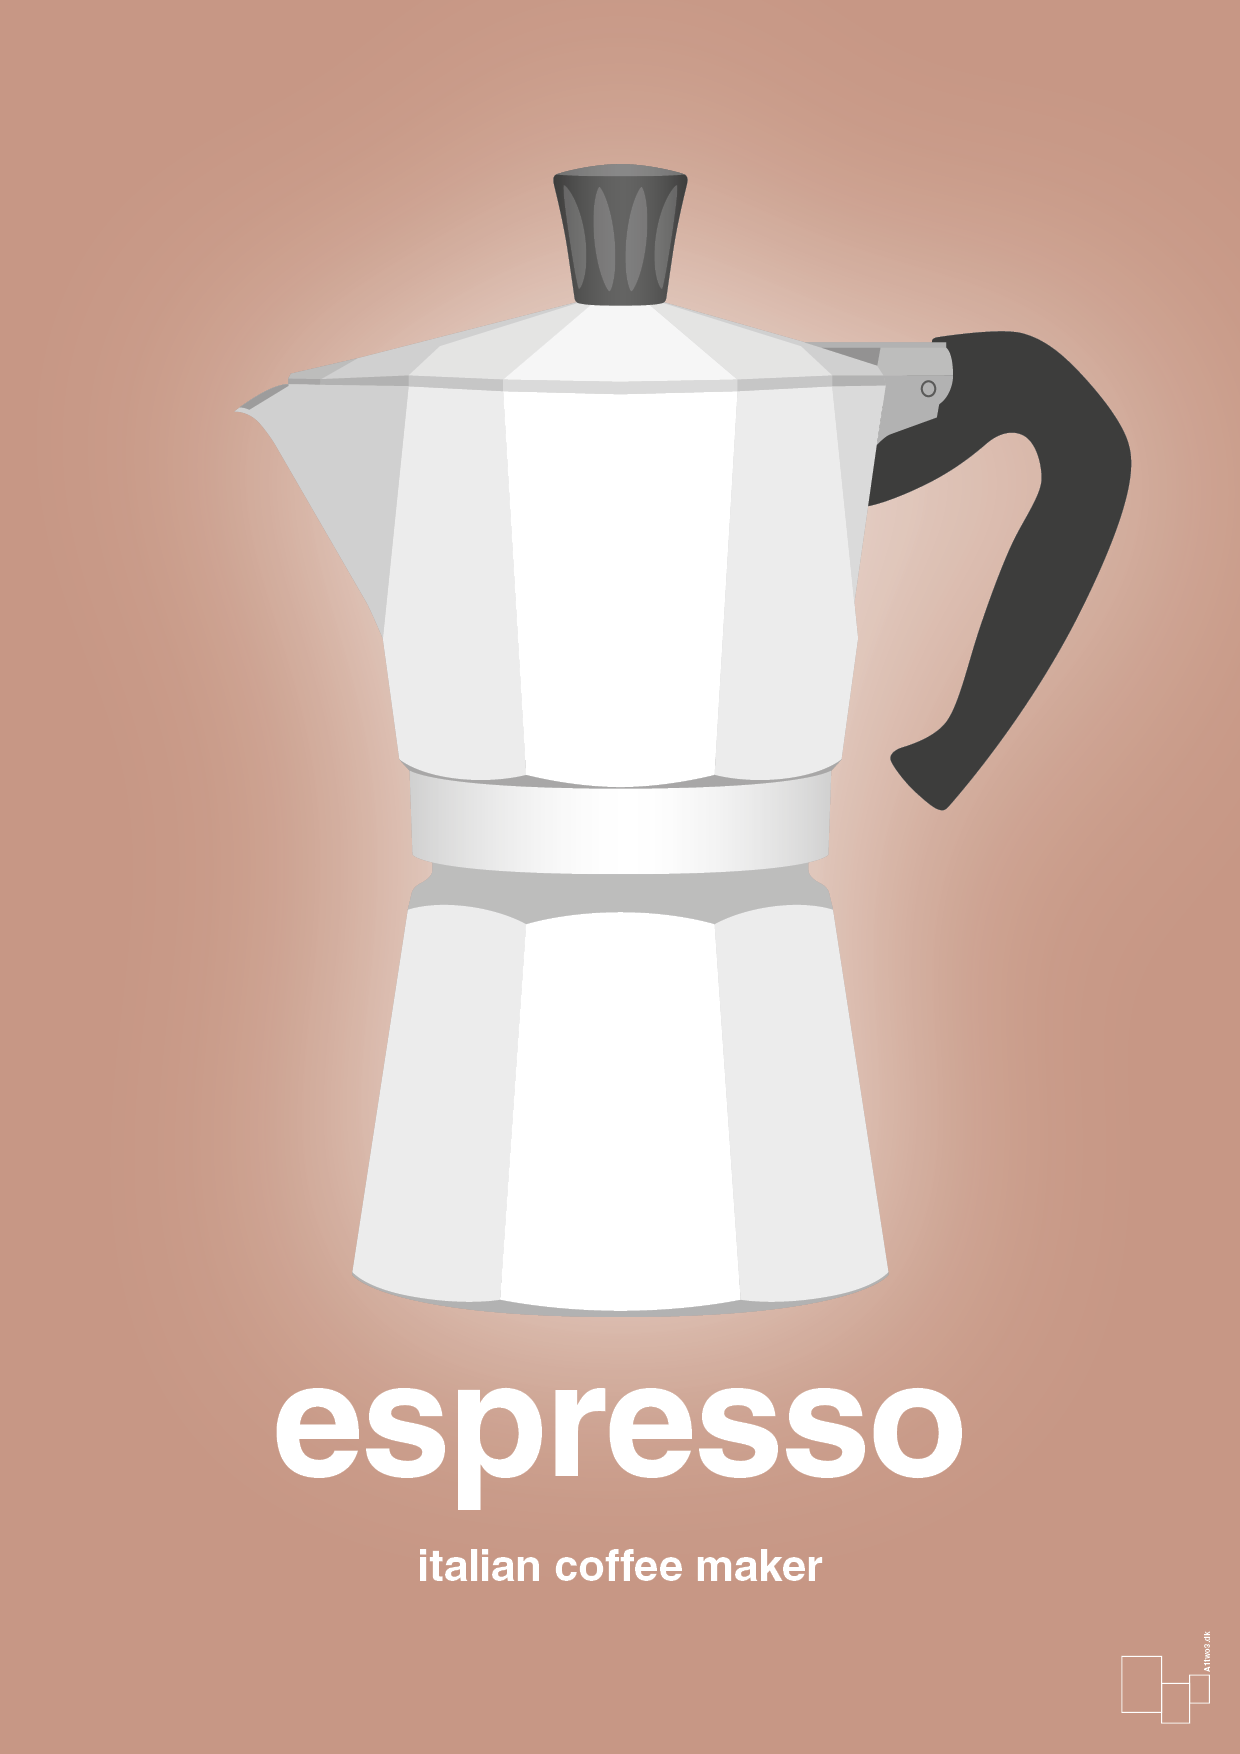 espresso - italian coffee maker - Plakat med Mad & Drikke i Powder